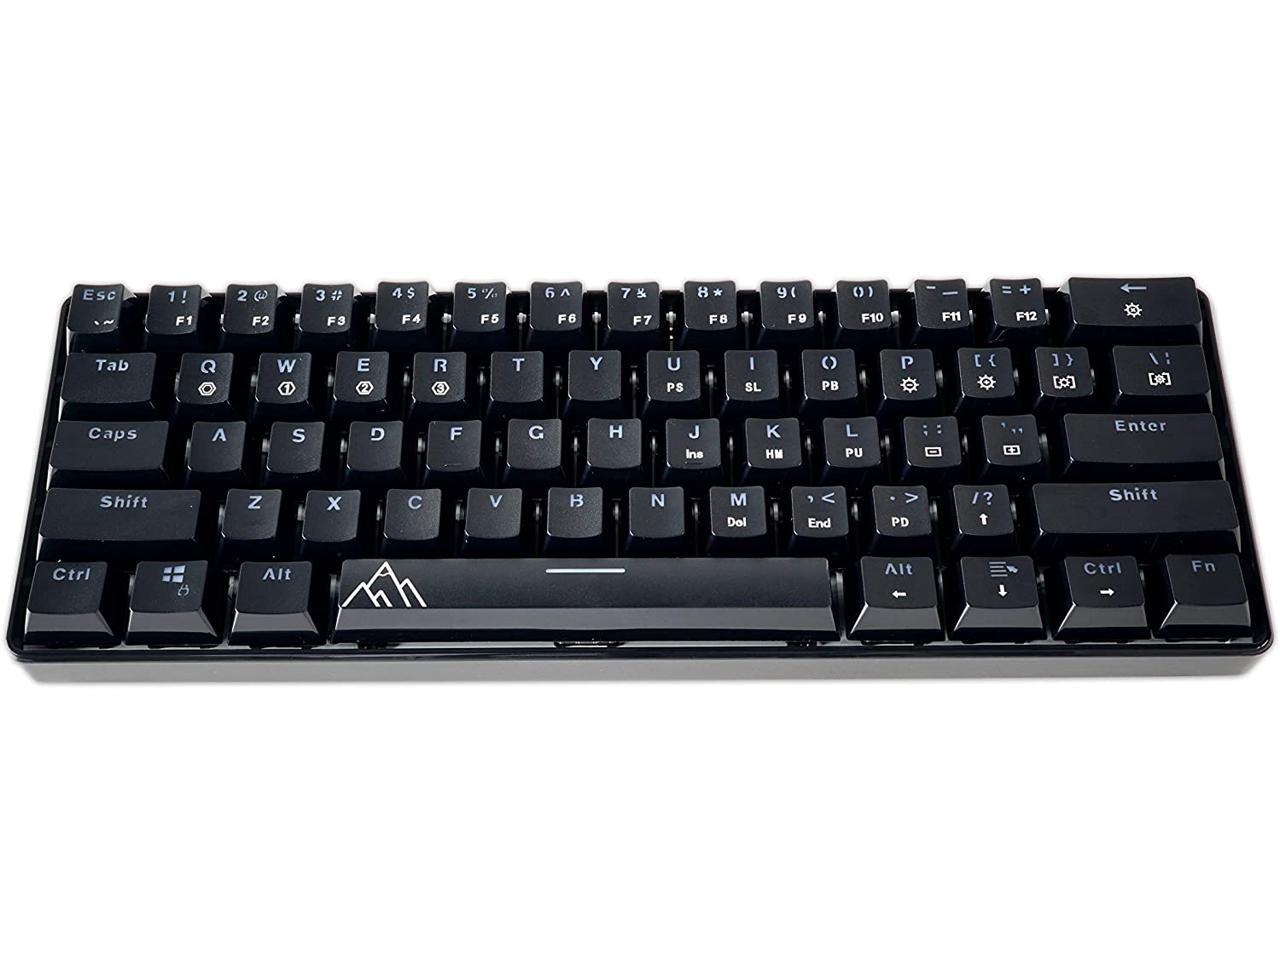 Xd60 Keyboard. Gigabyte a5 k1 клавиатура. 60 Клавиатура. Клавиатуры 60-65%.